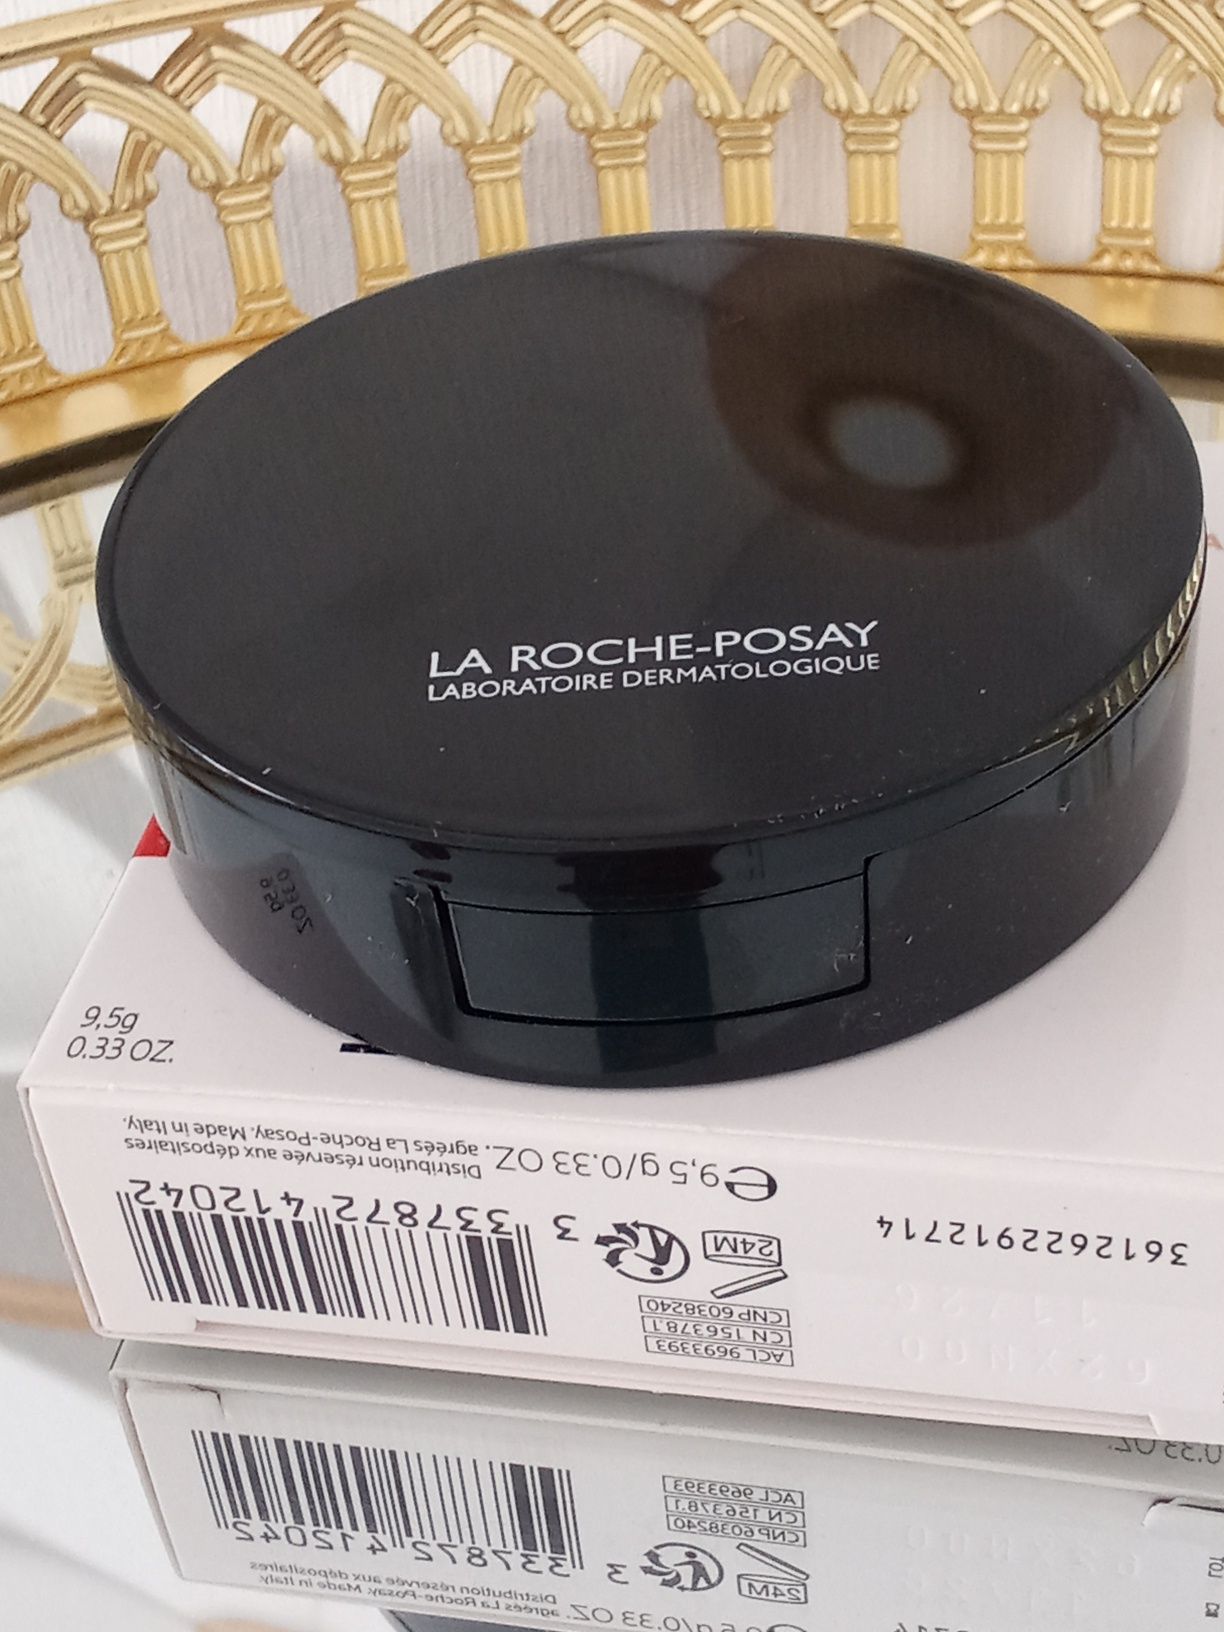 La Roche posay puder mineralny z filtrem w kamieniu